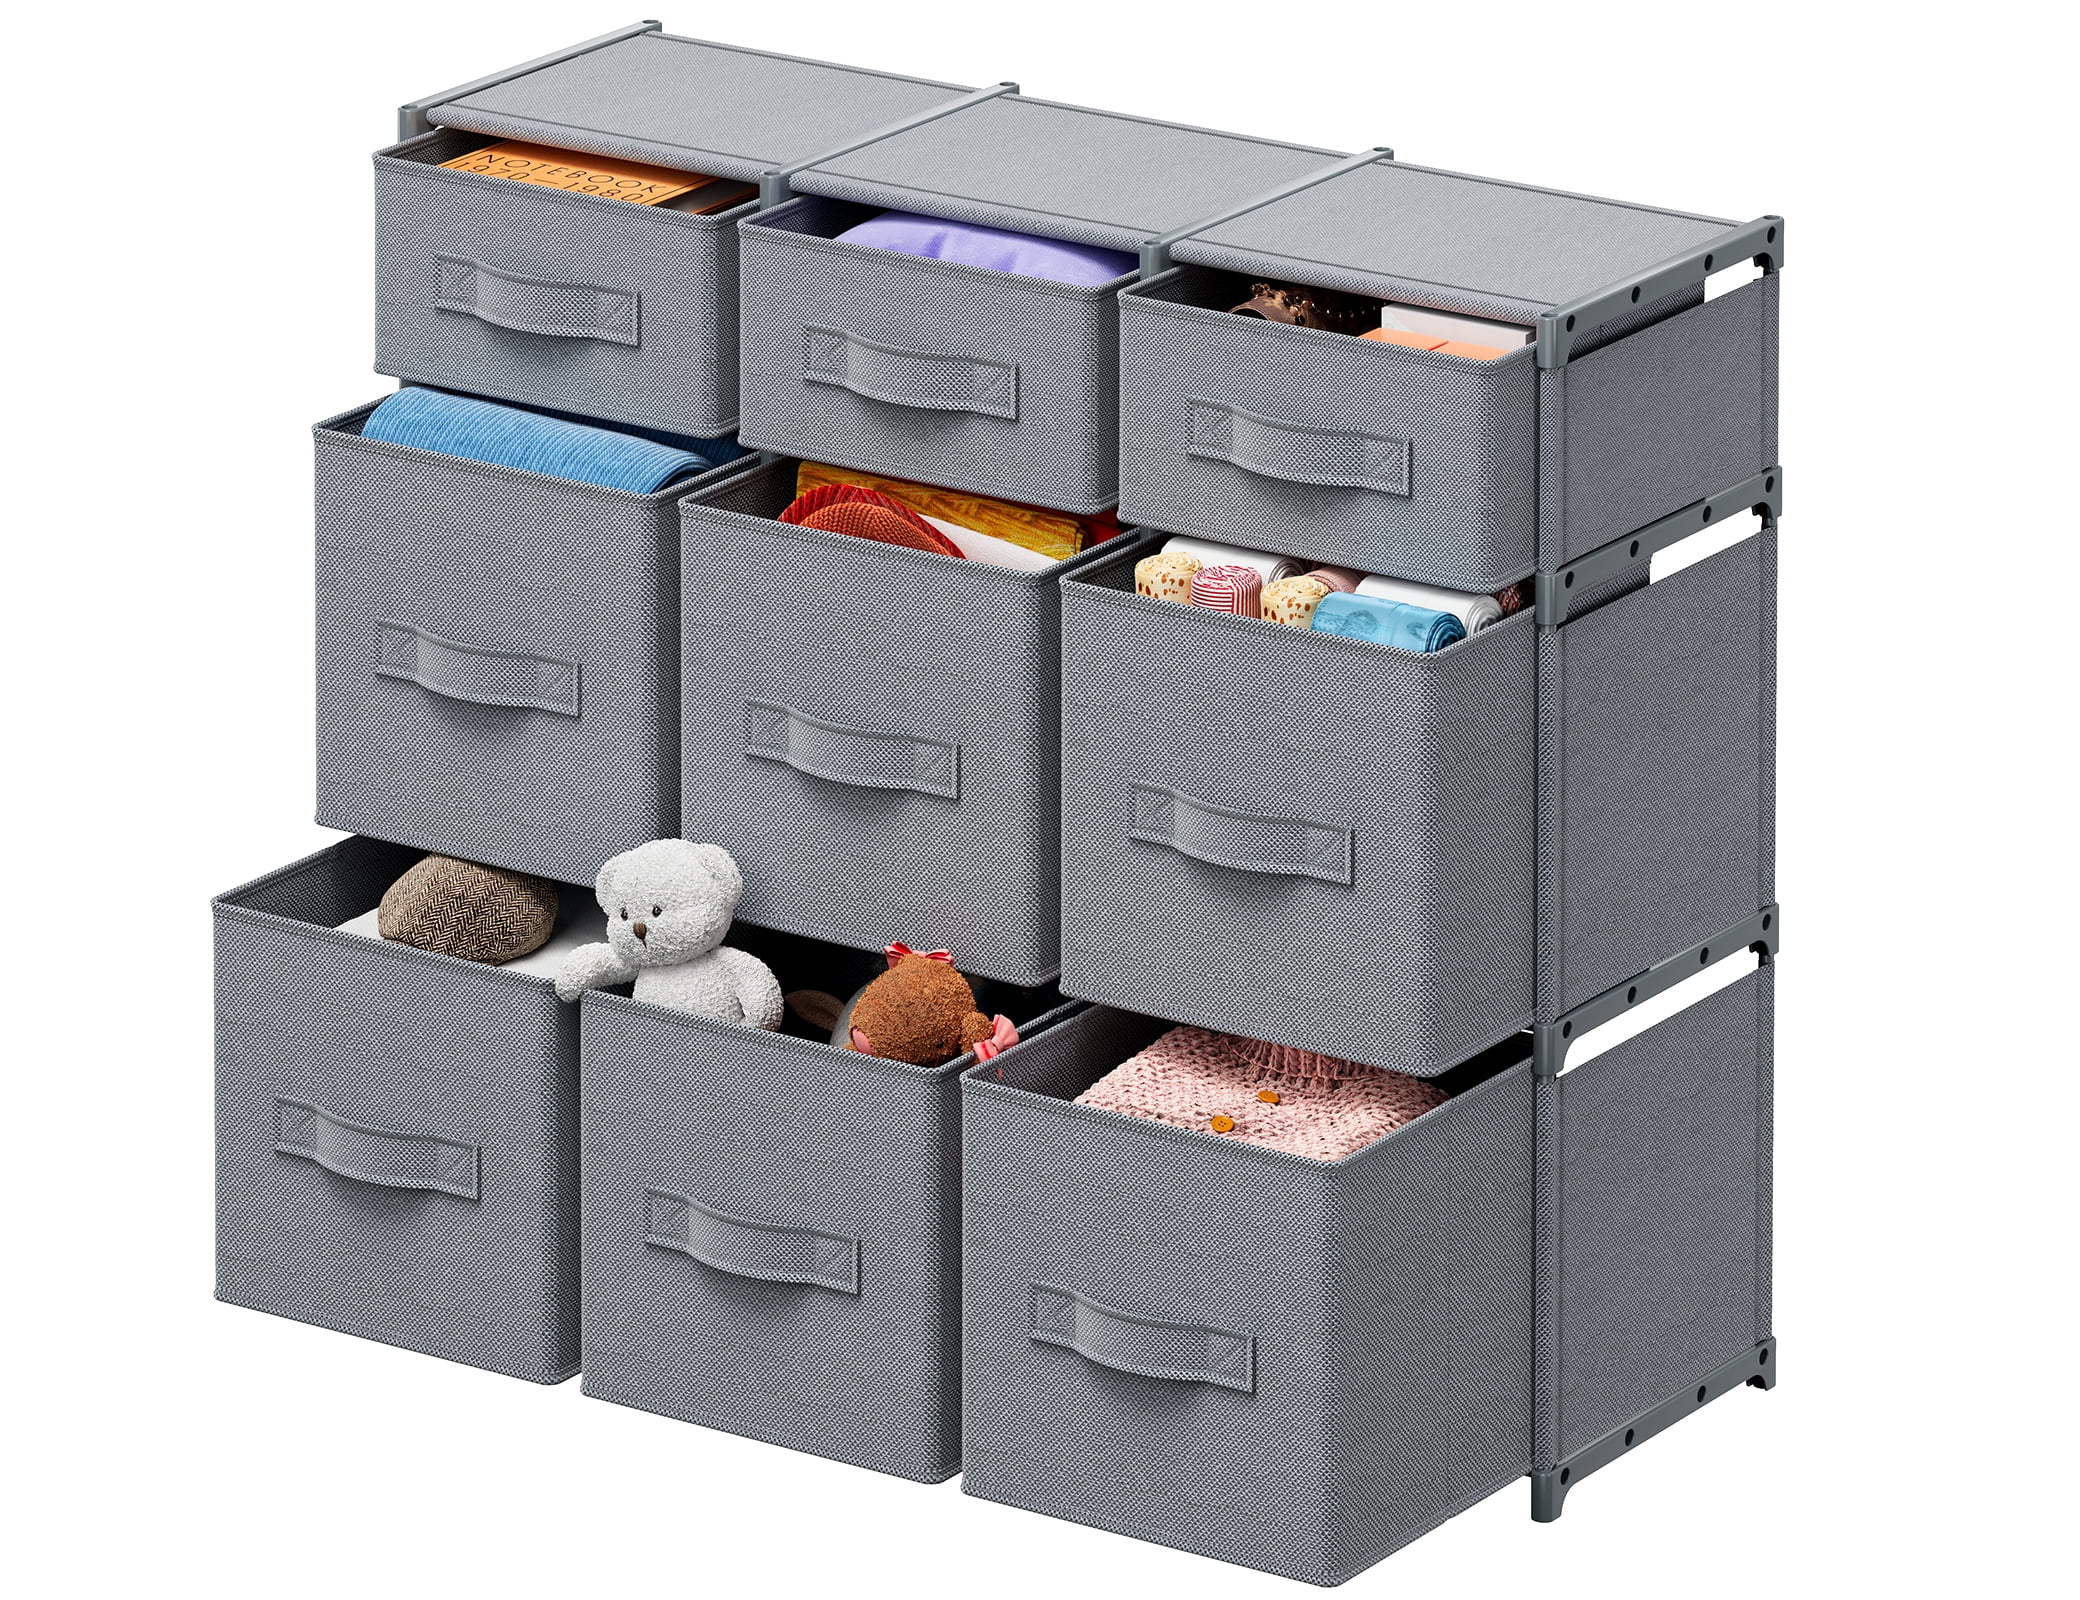 Highwell Cube Storage Organizer, 9-Cube Closet Organizers and